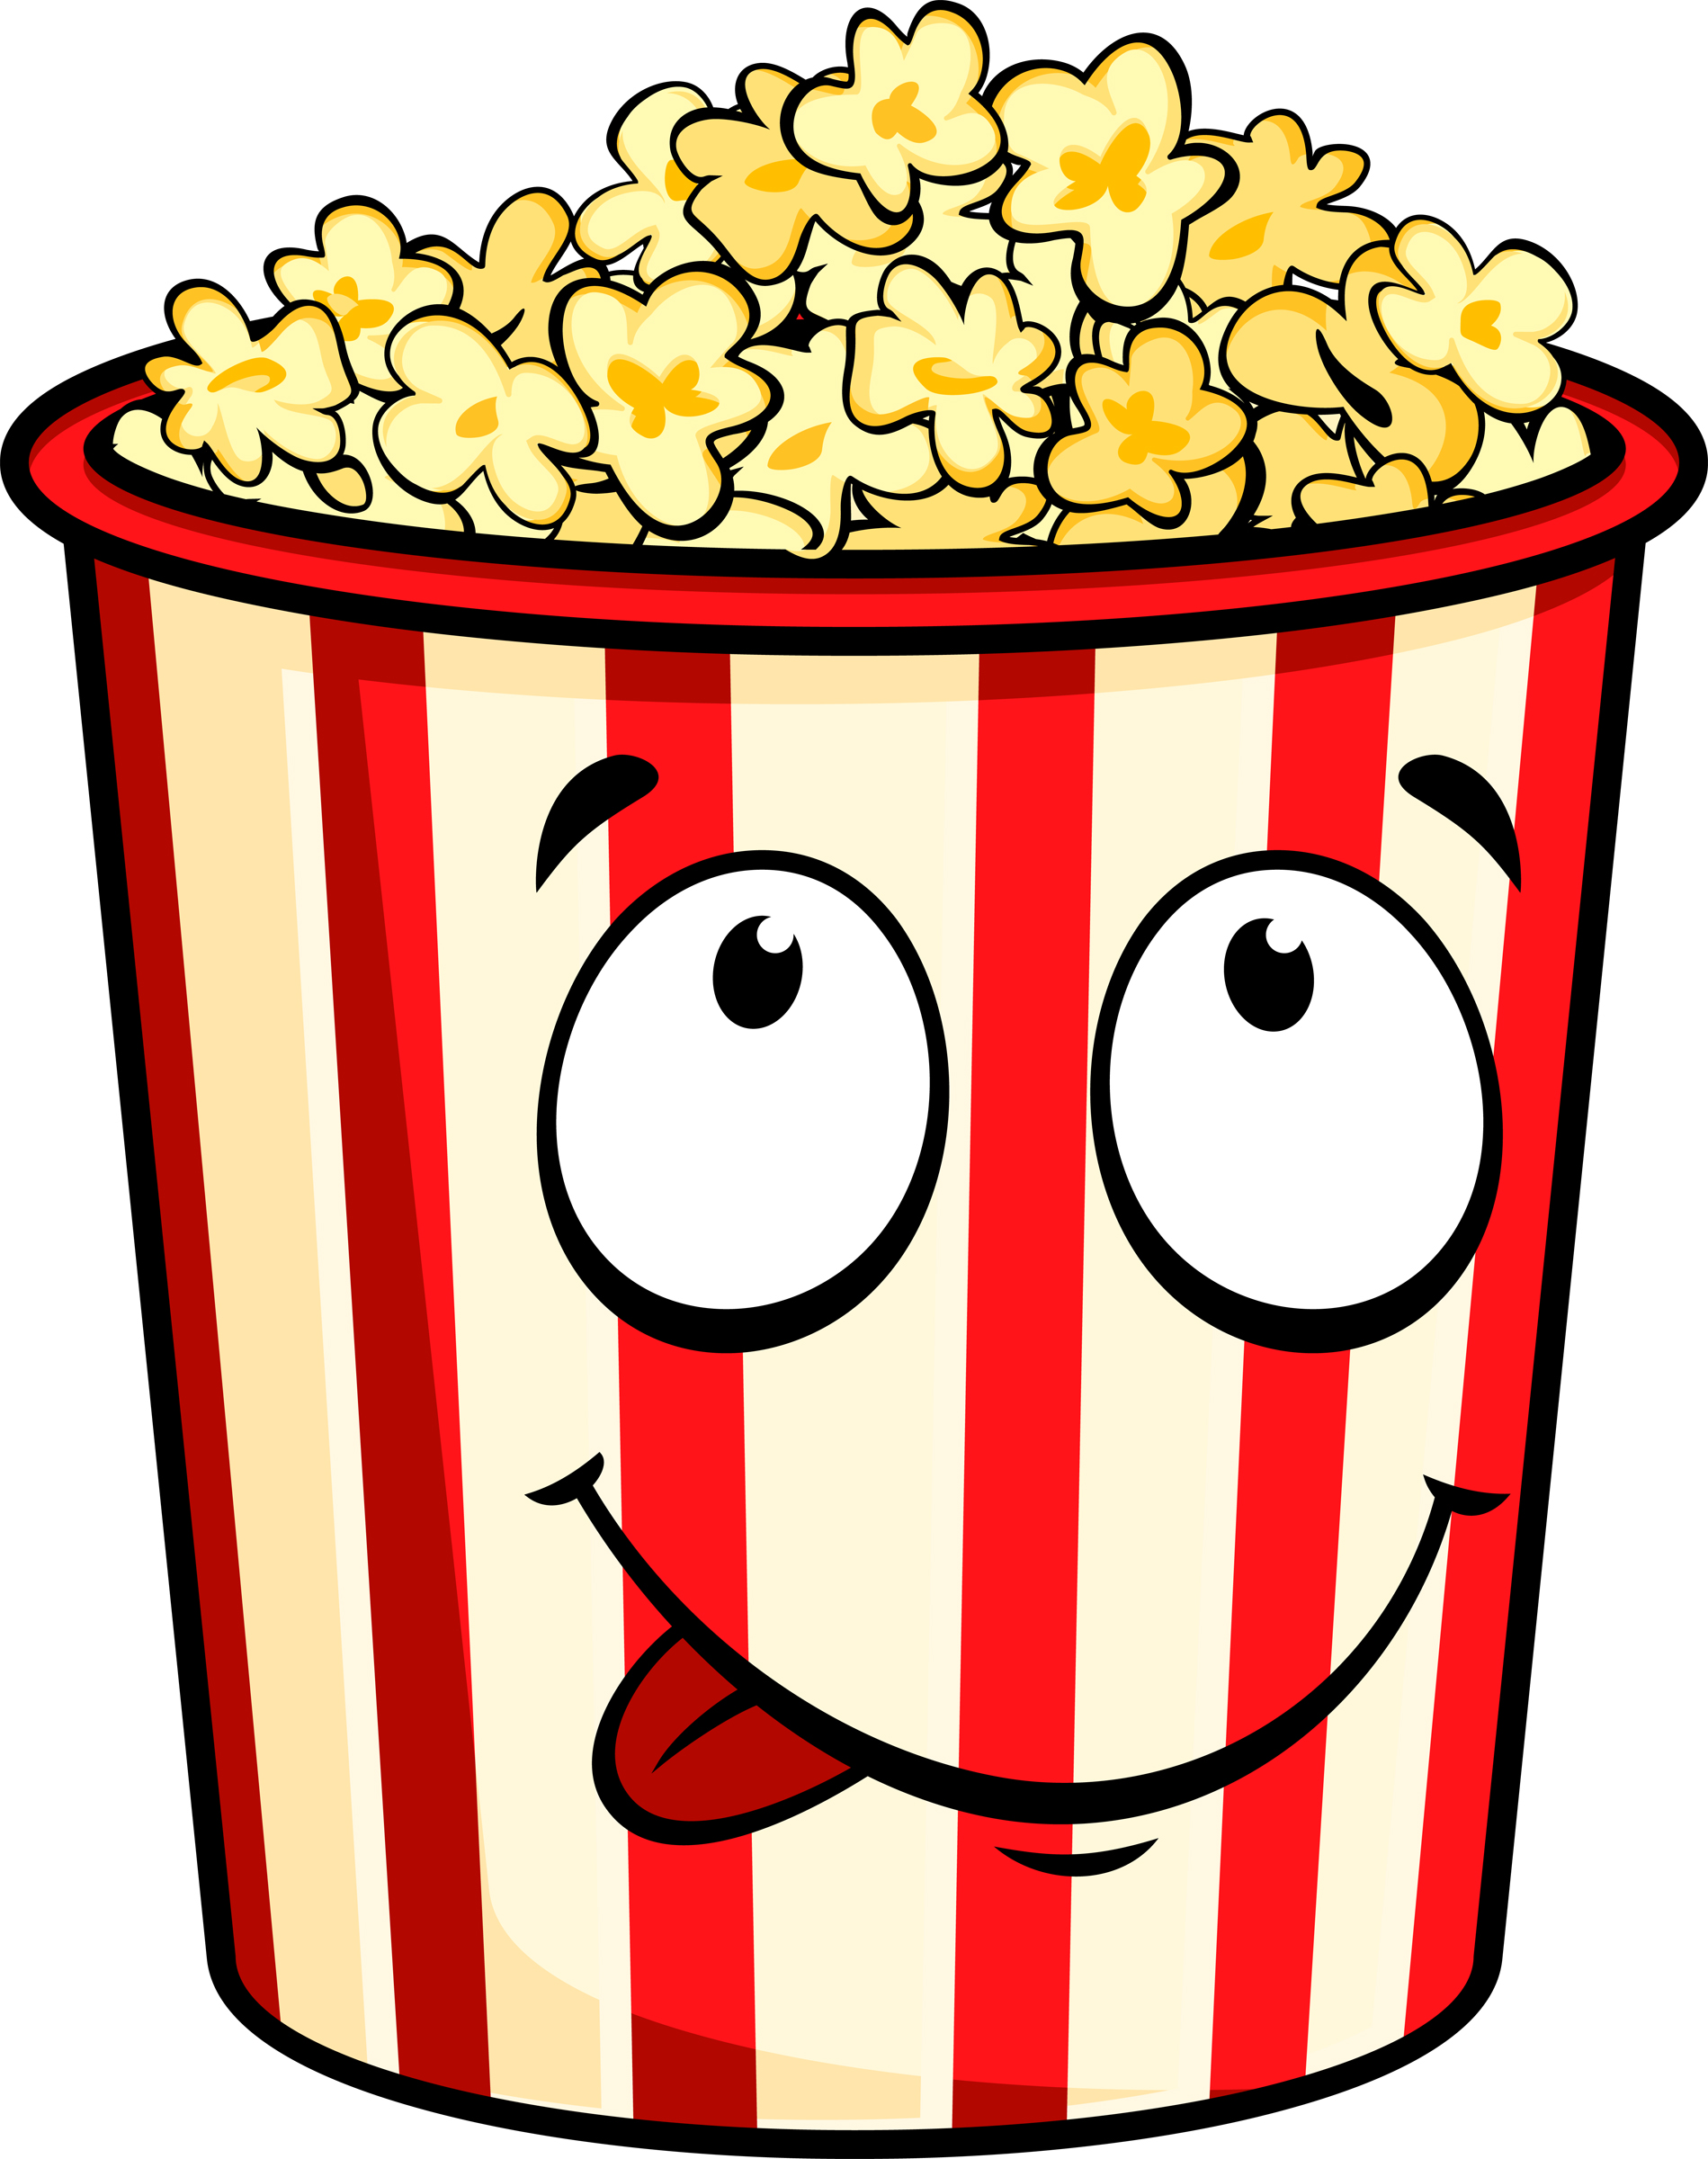  free cliparting com. Movie clipart bowl popcorn